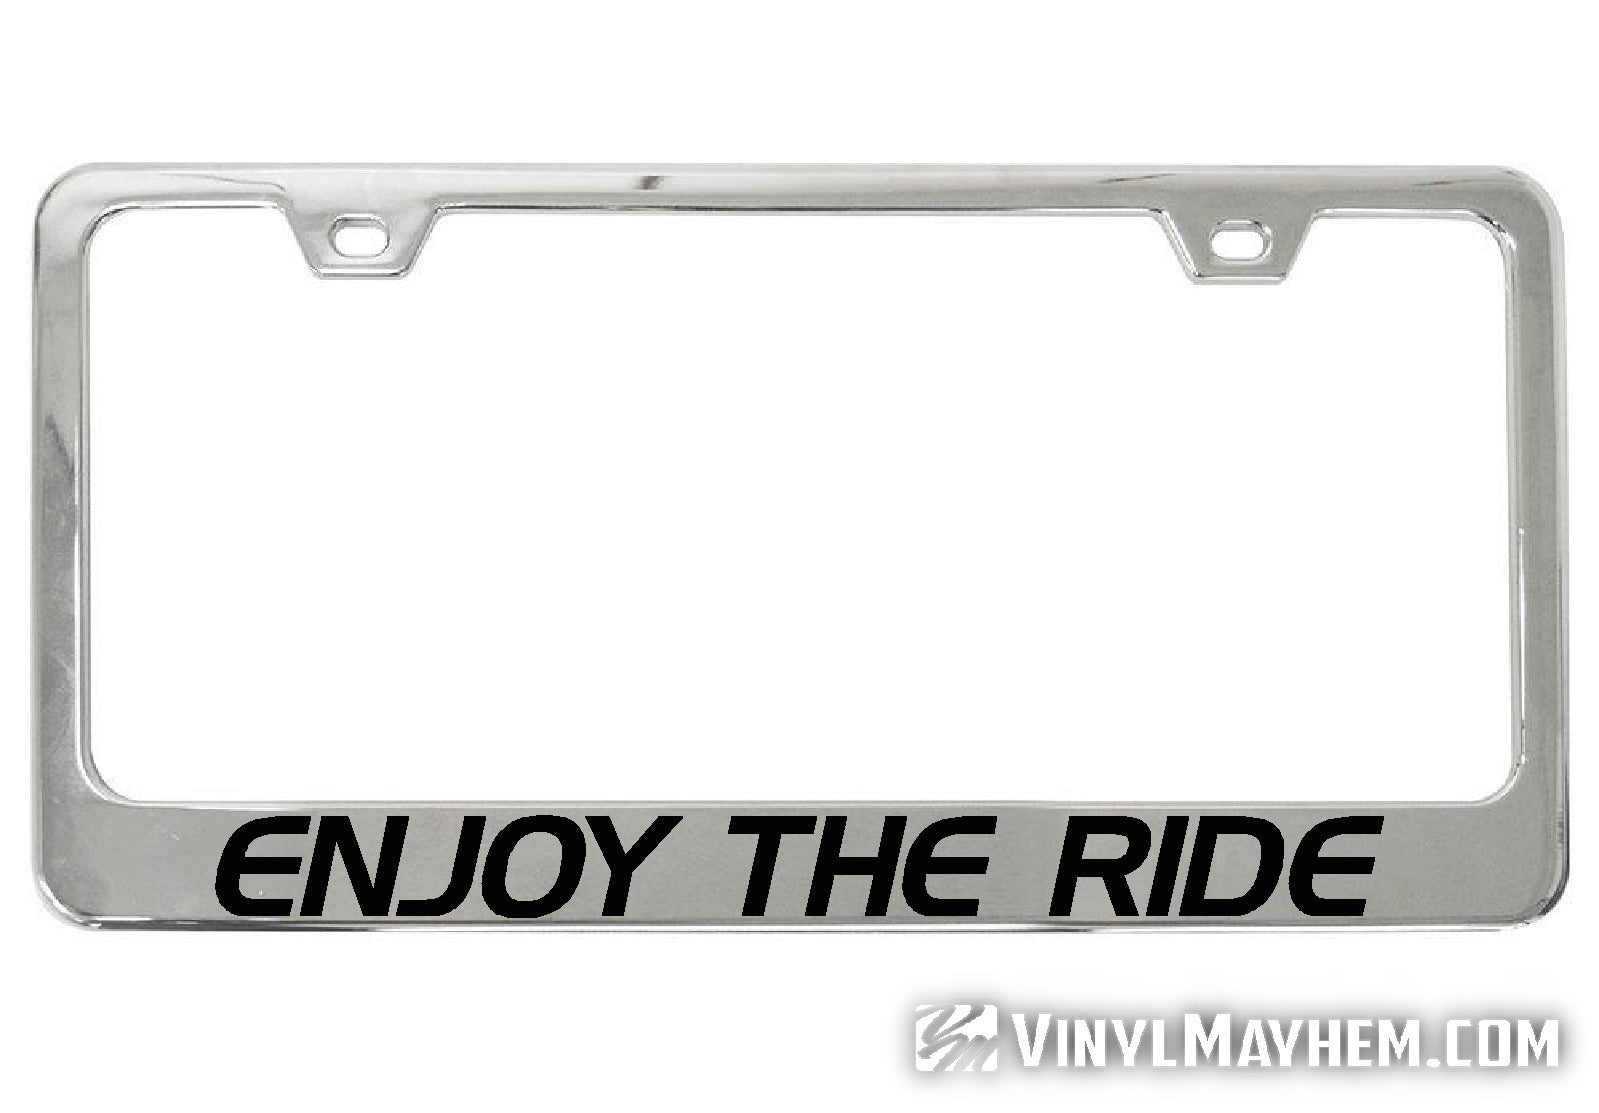 Enjoy The Ride chrome license plate frame